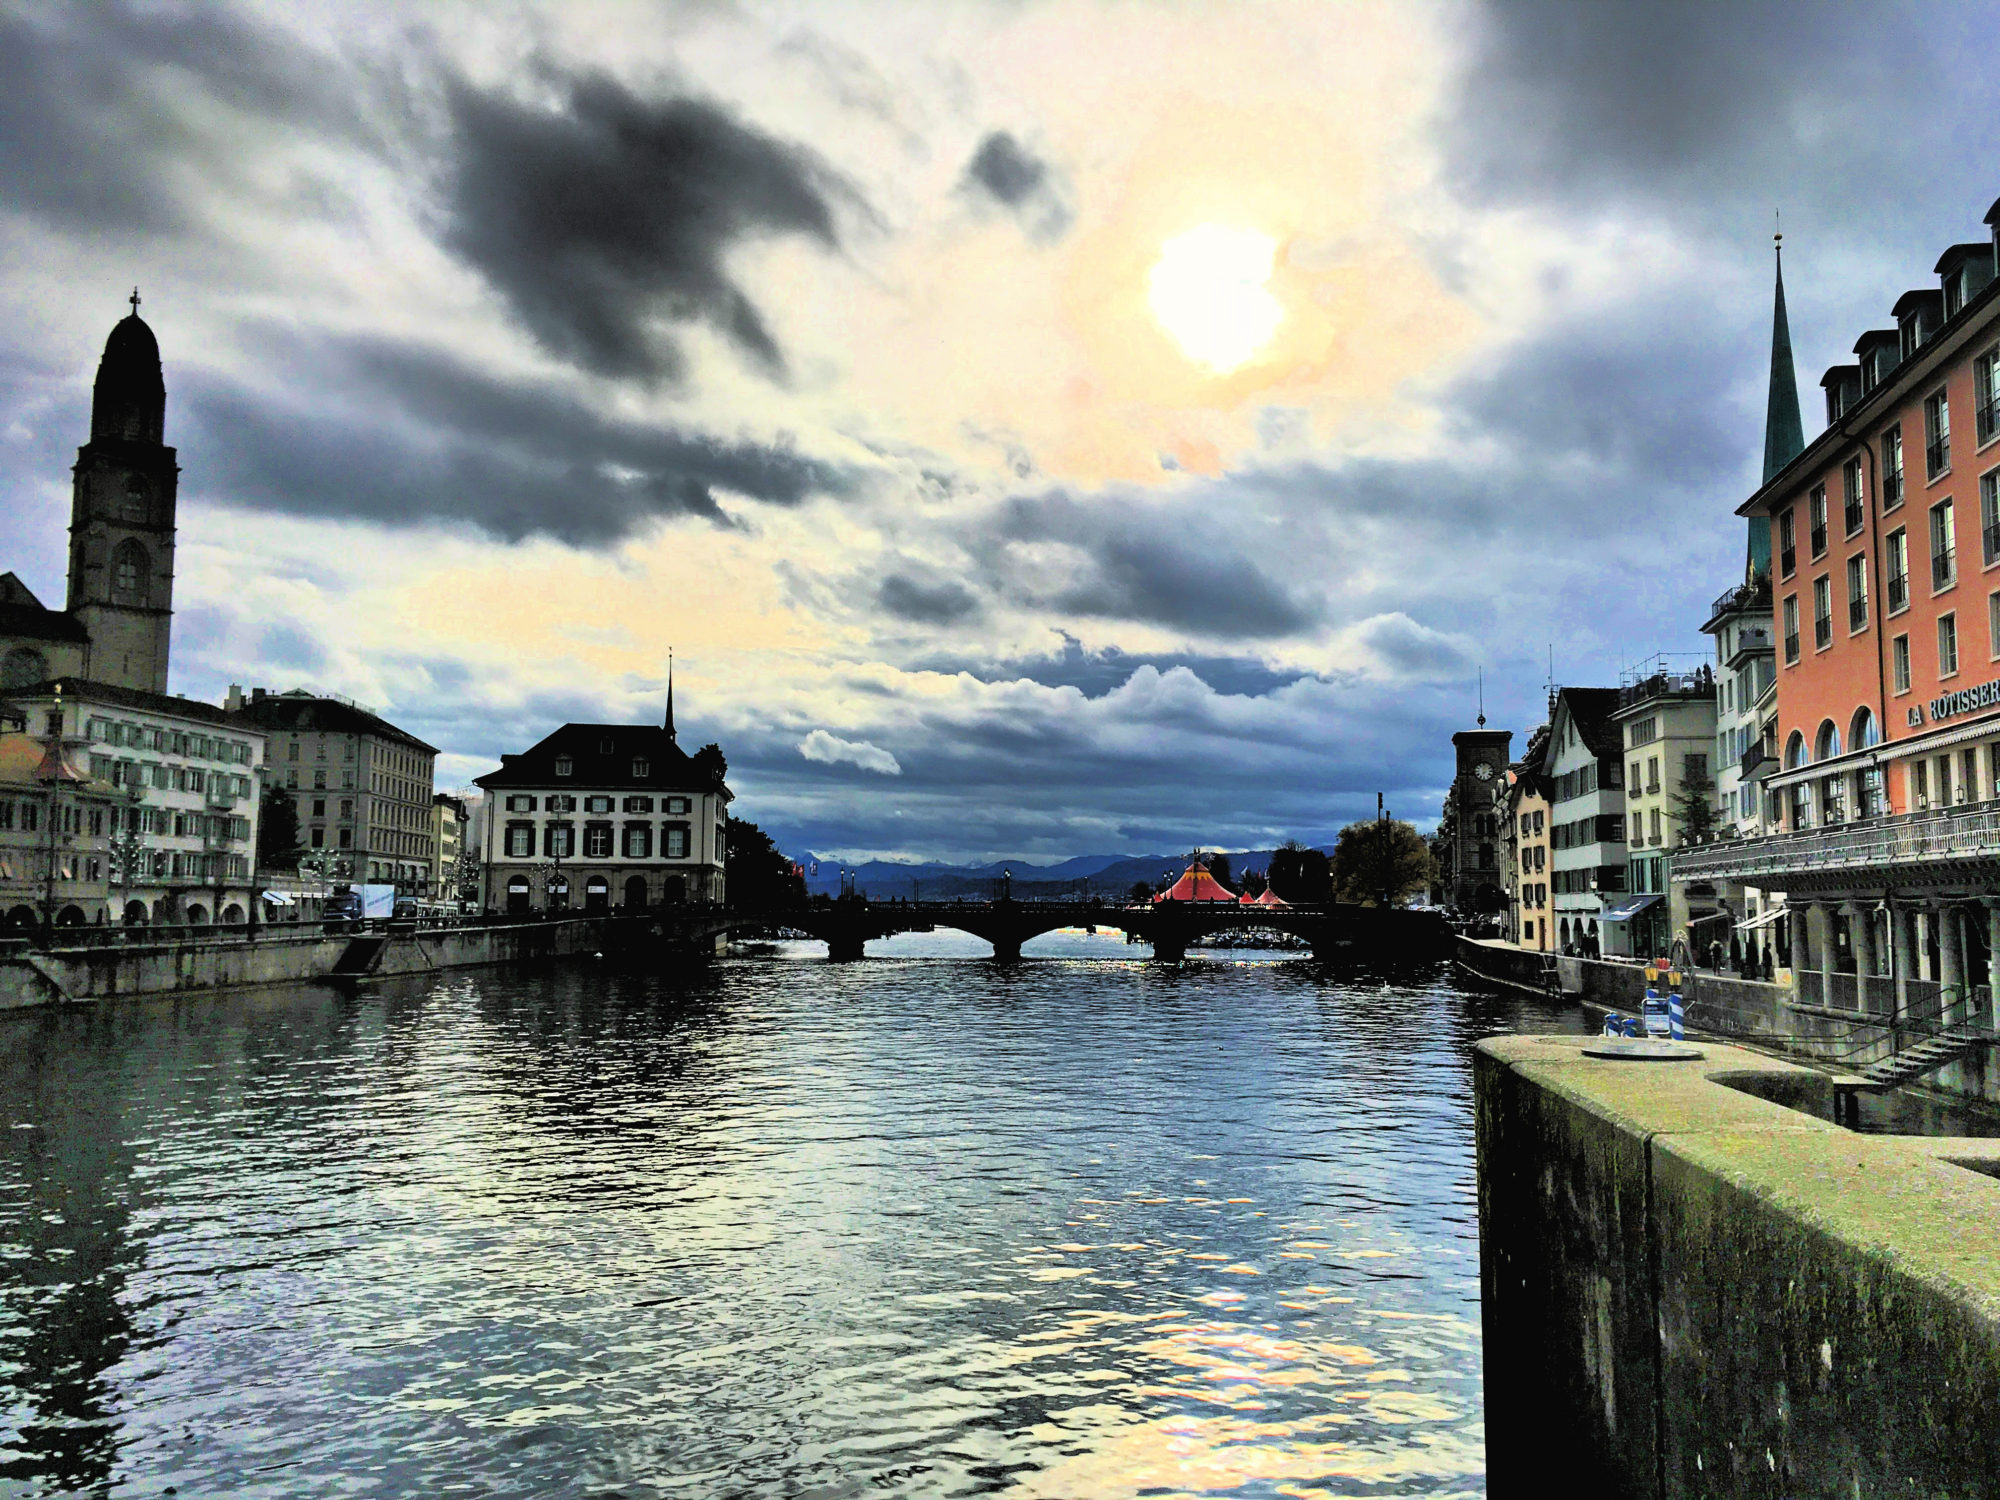 Altstadt, Zürich is well worth seeing!